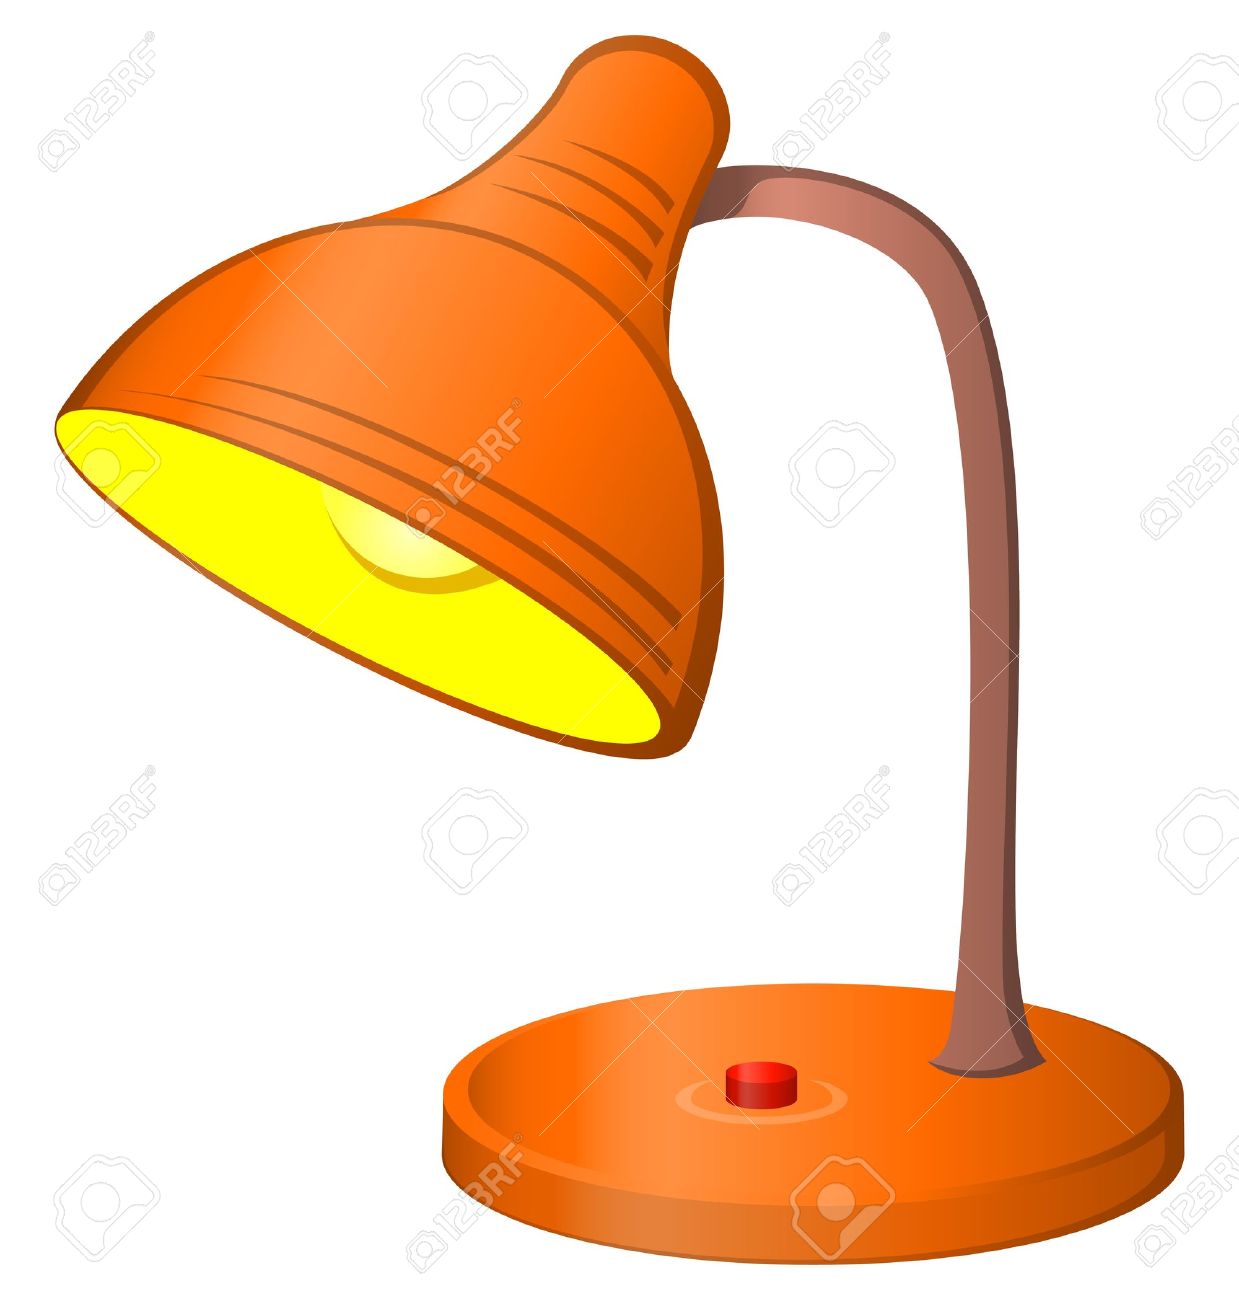 Lamp Clipart Image: Antique B